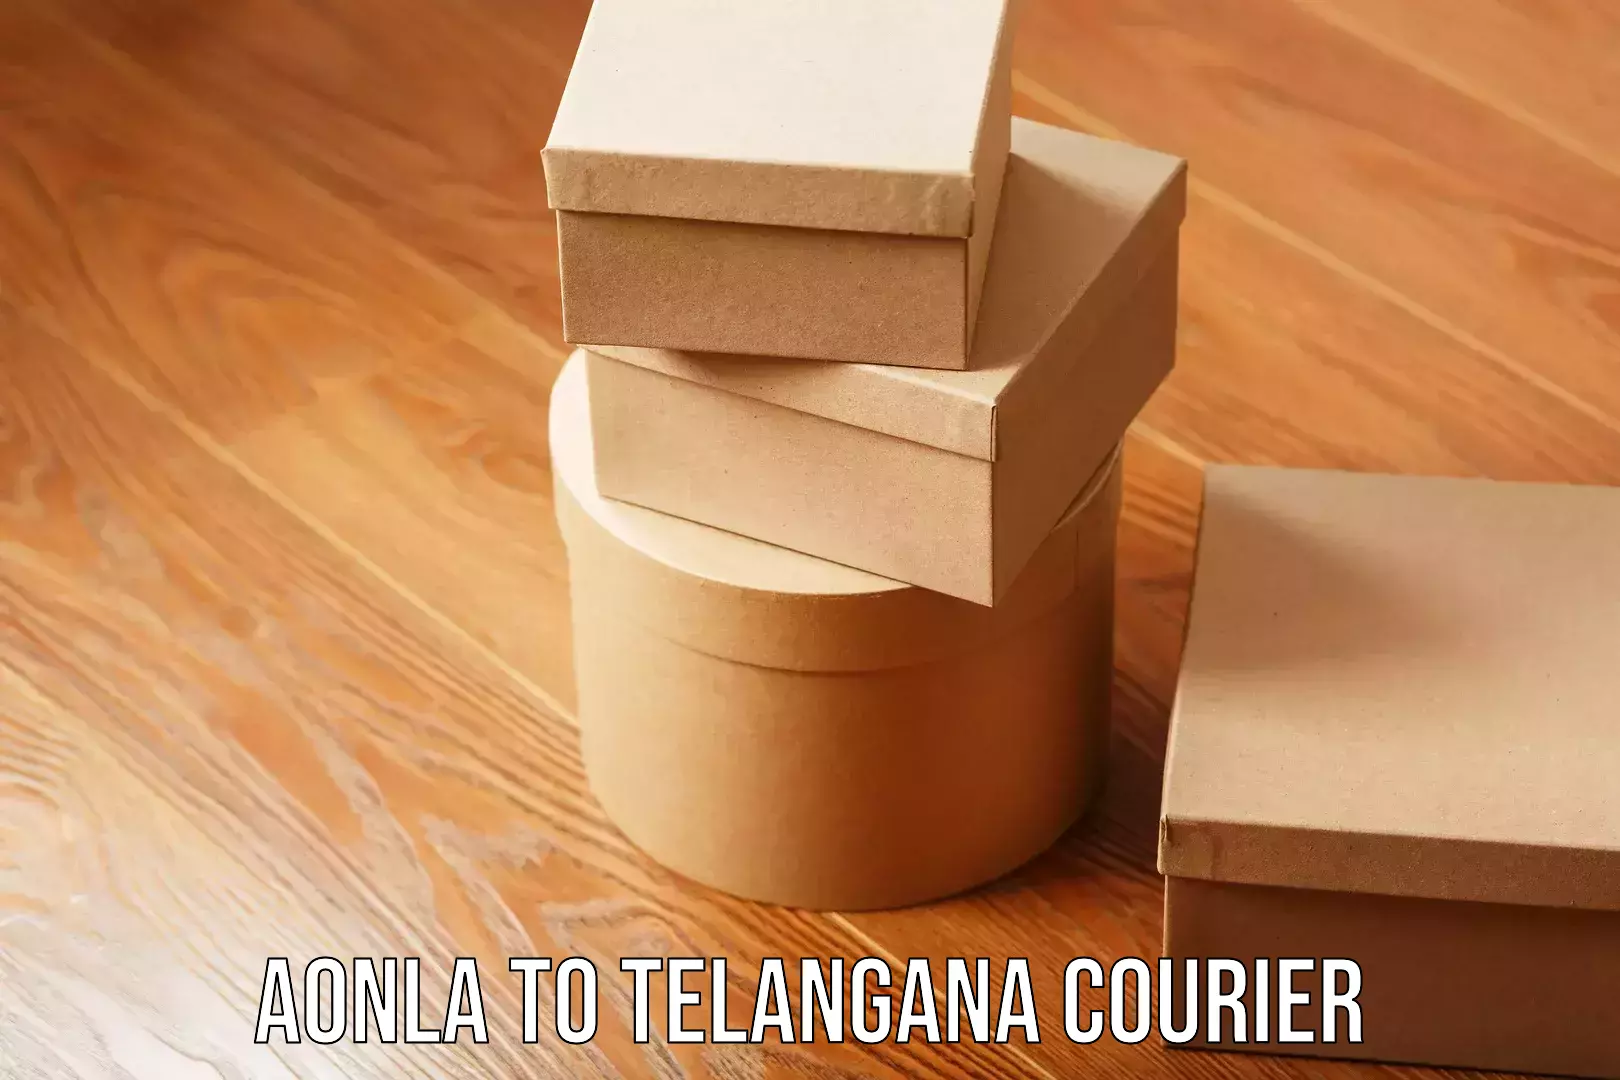 Modern courier technology Aonla to Telangana